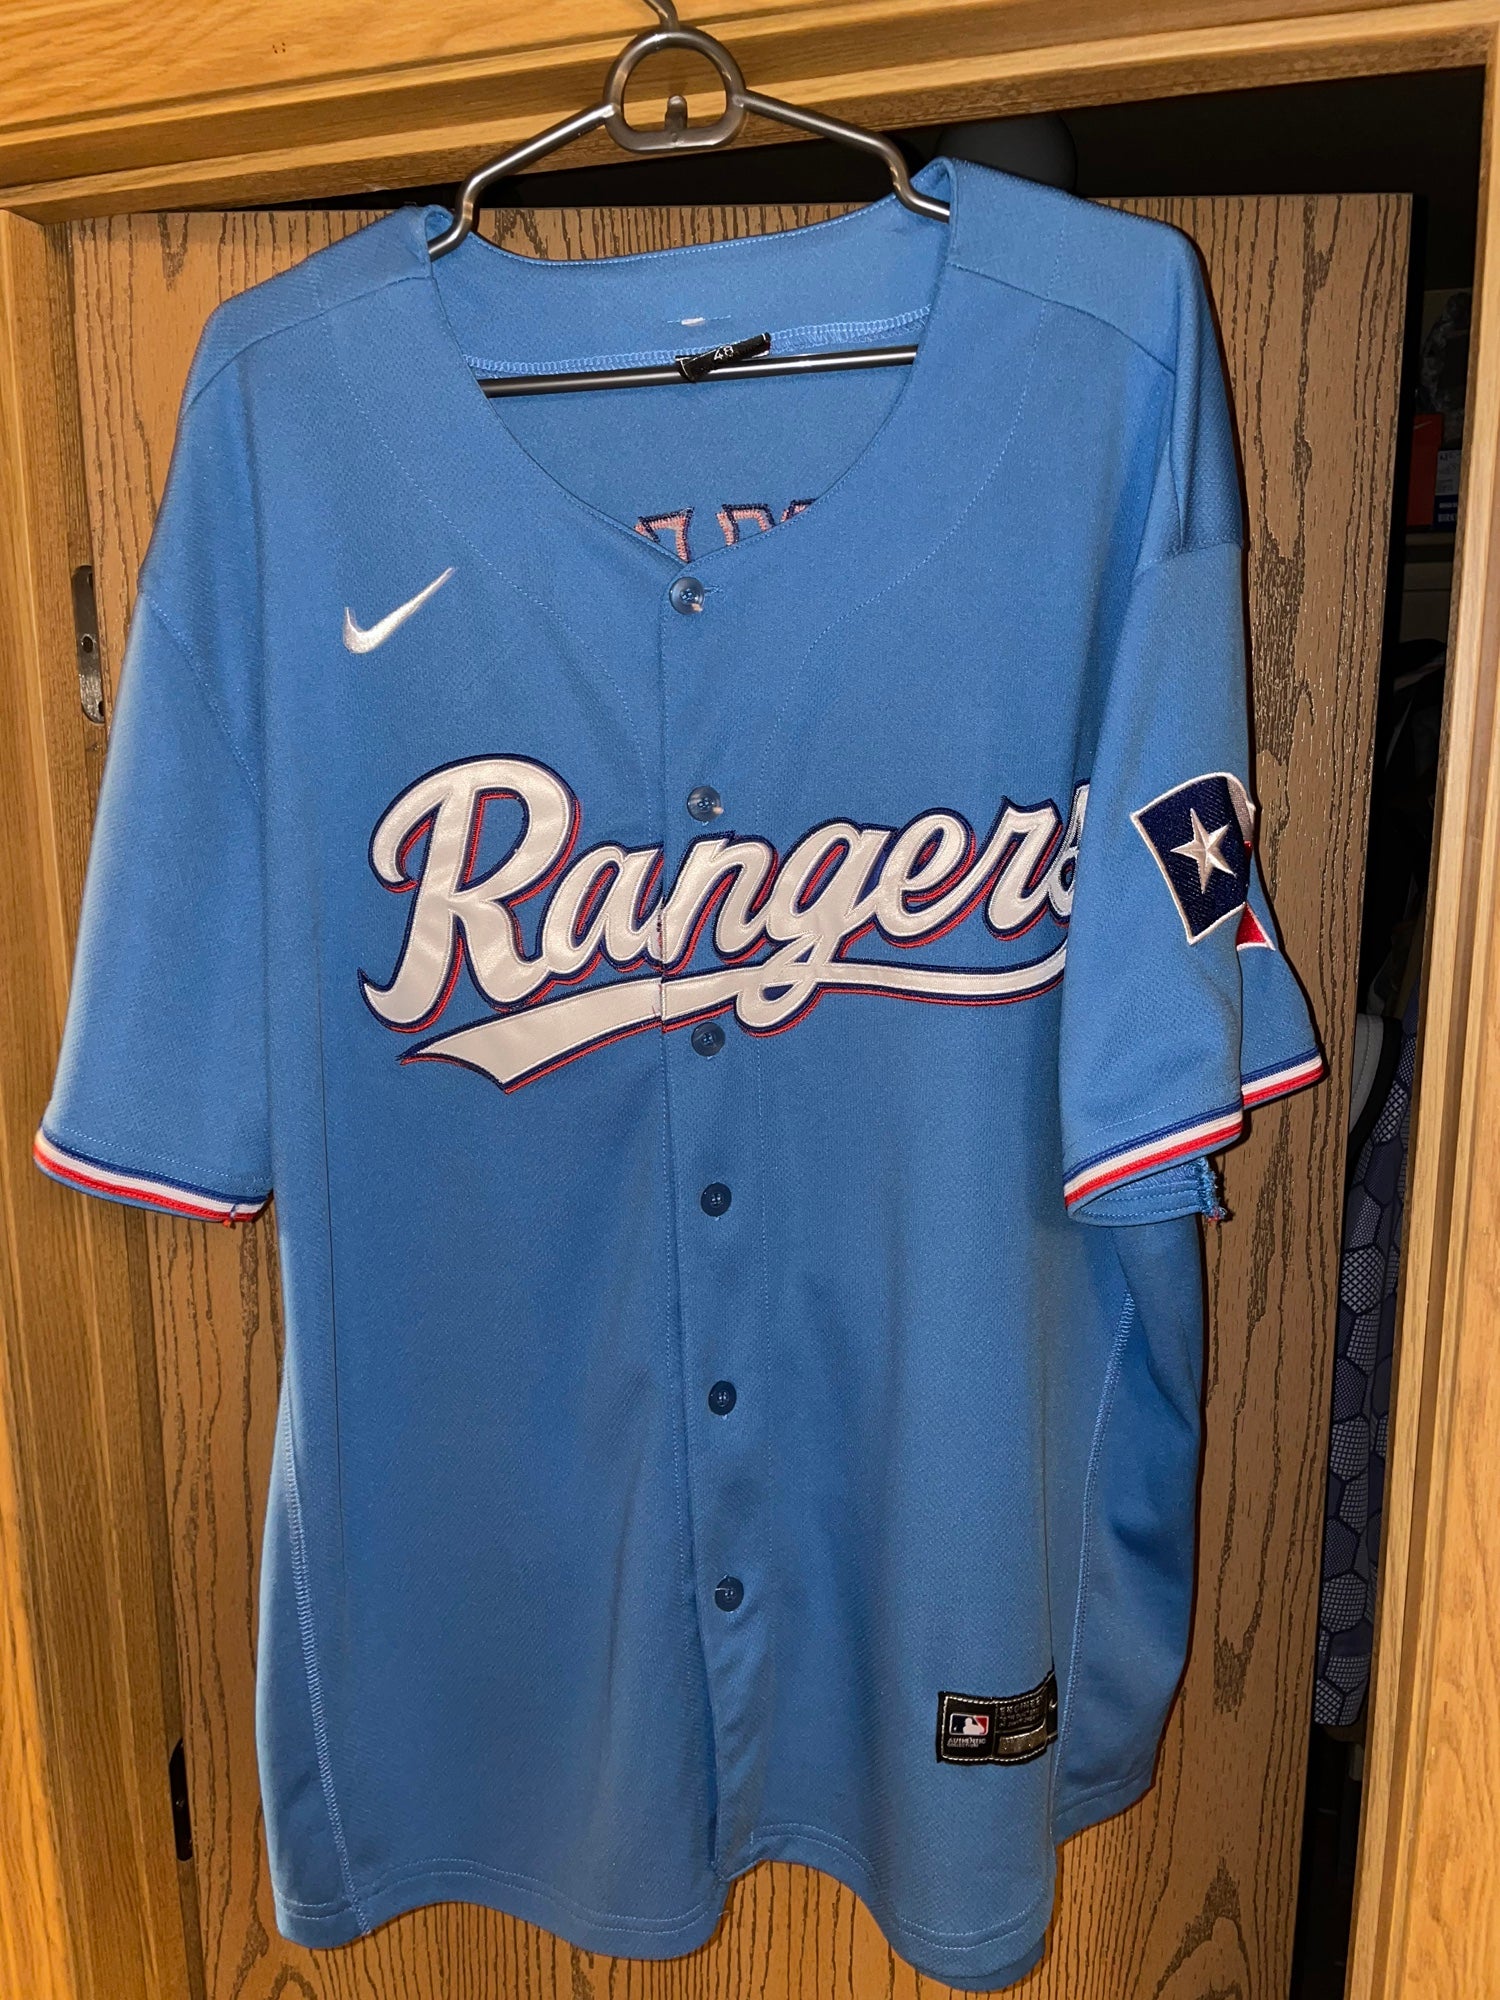 rangers baby blue uniforms